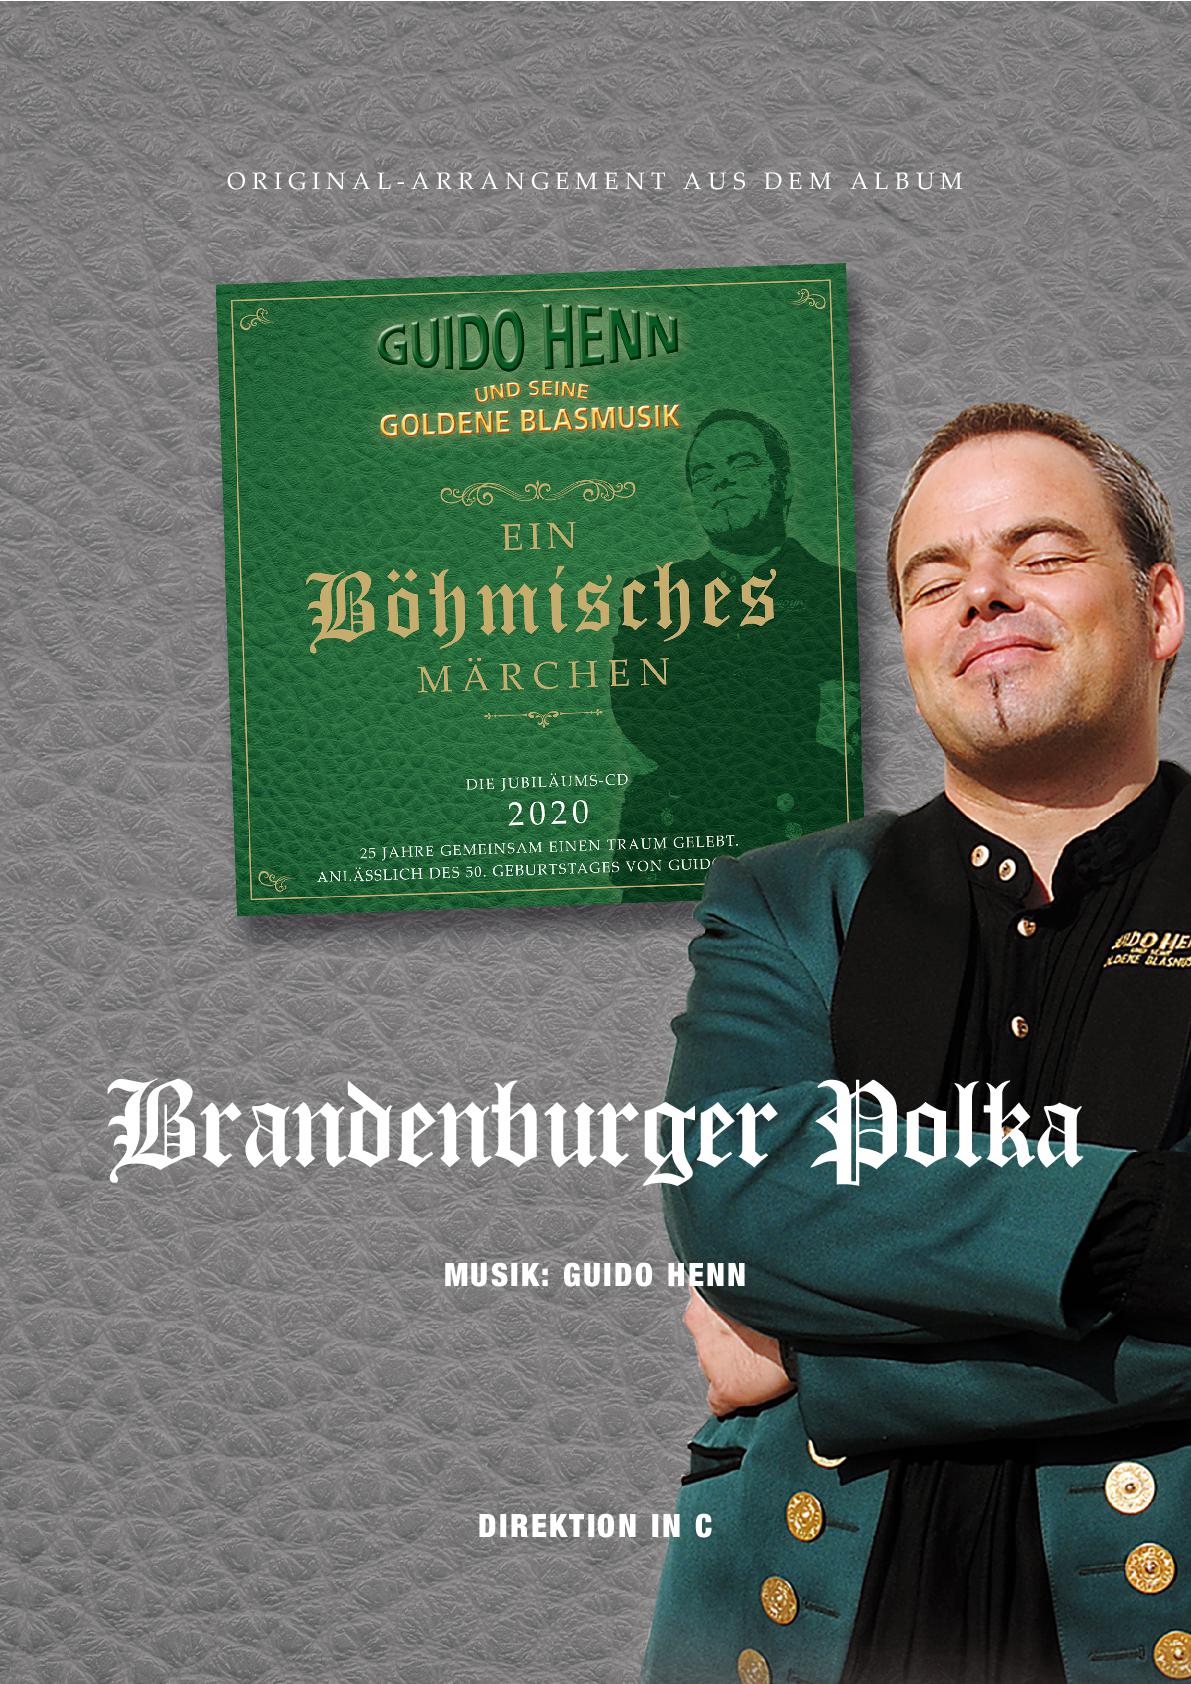 Brandenburger Polka